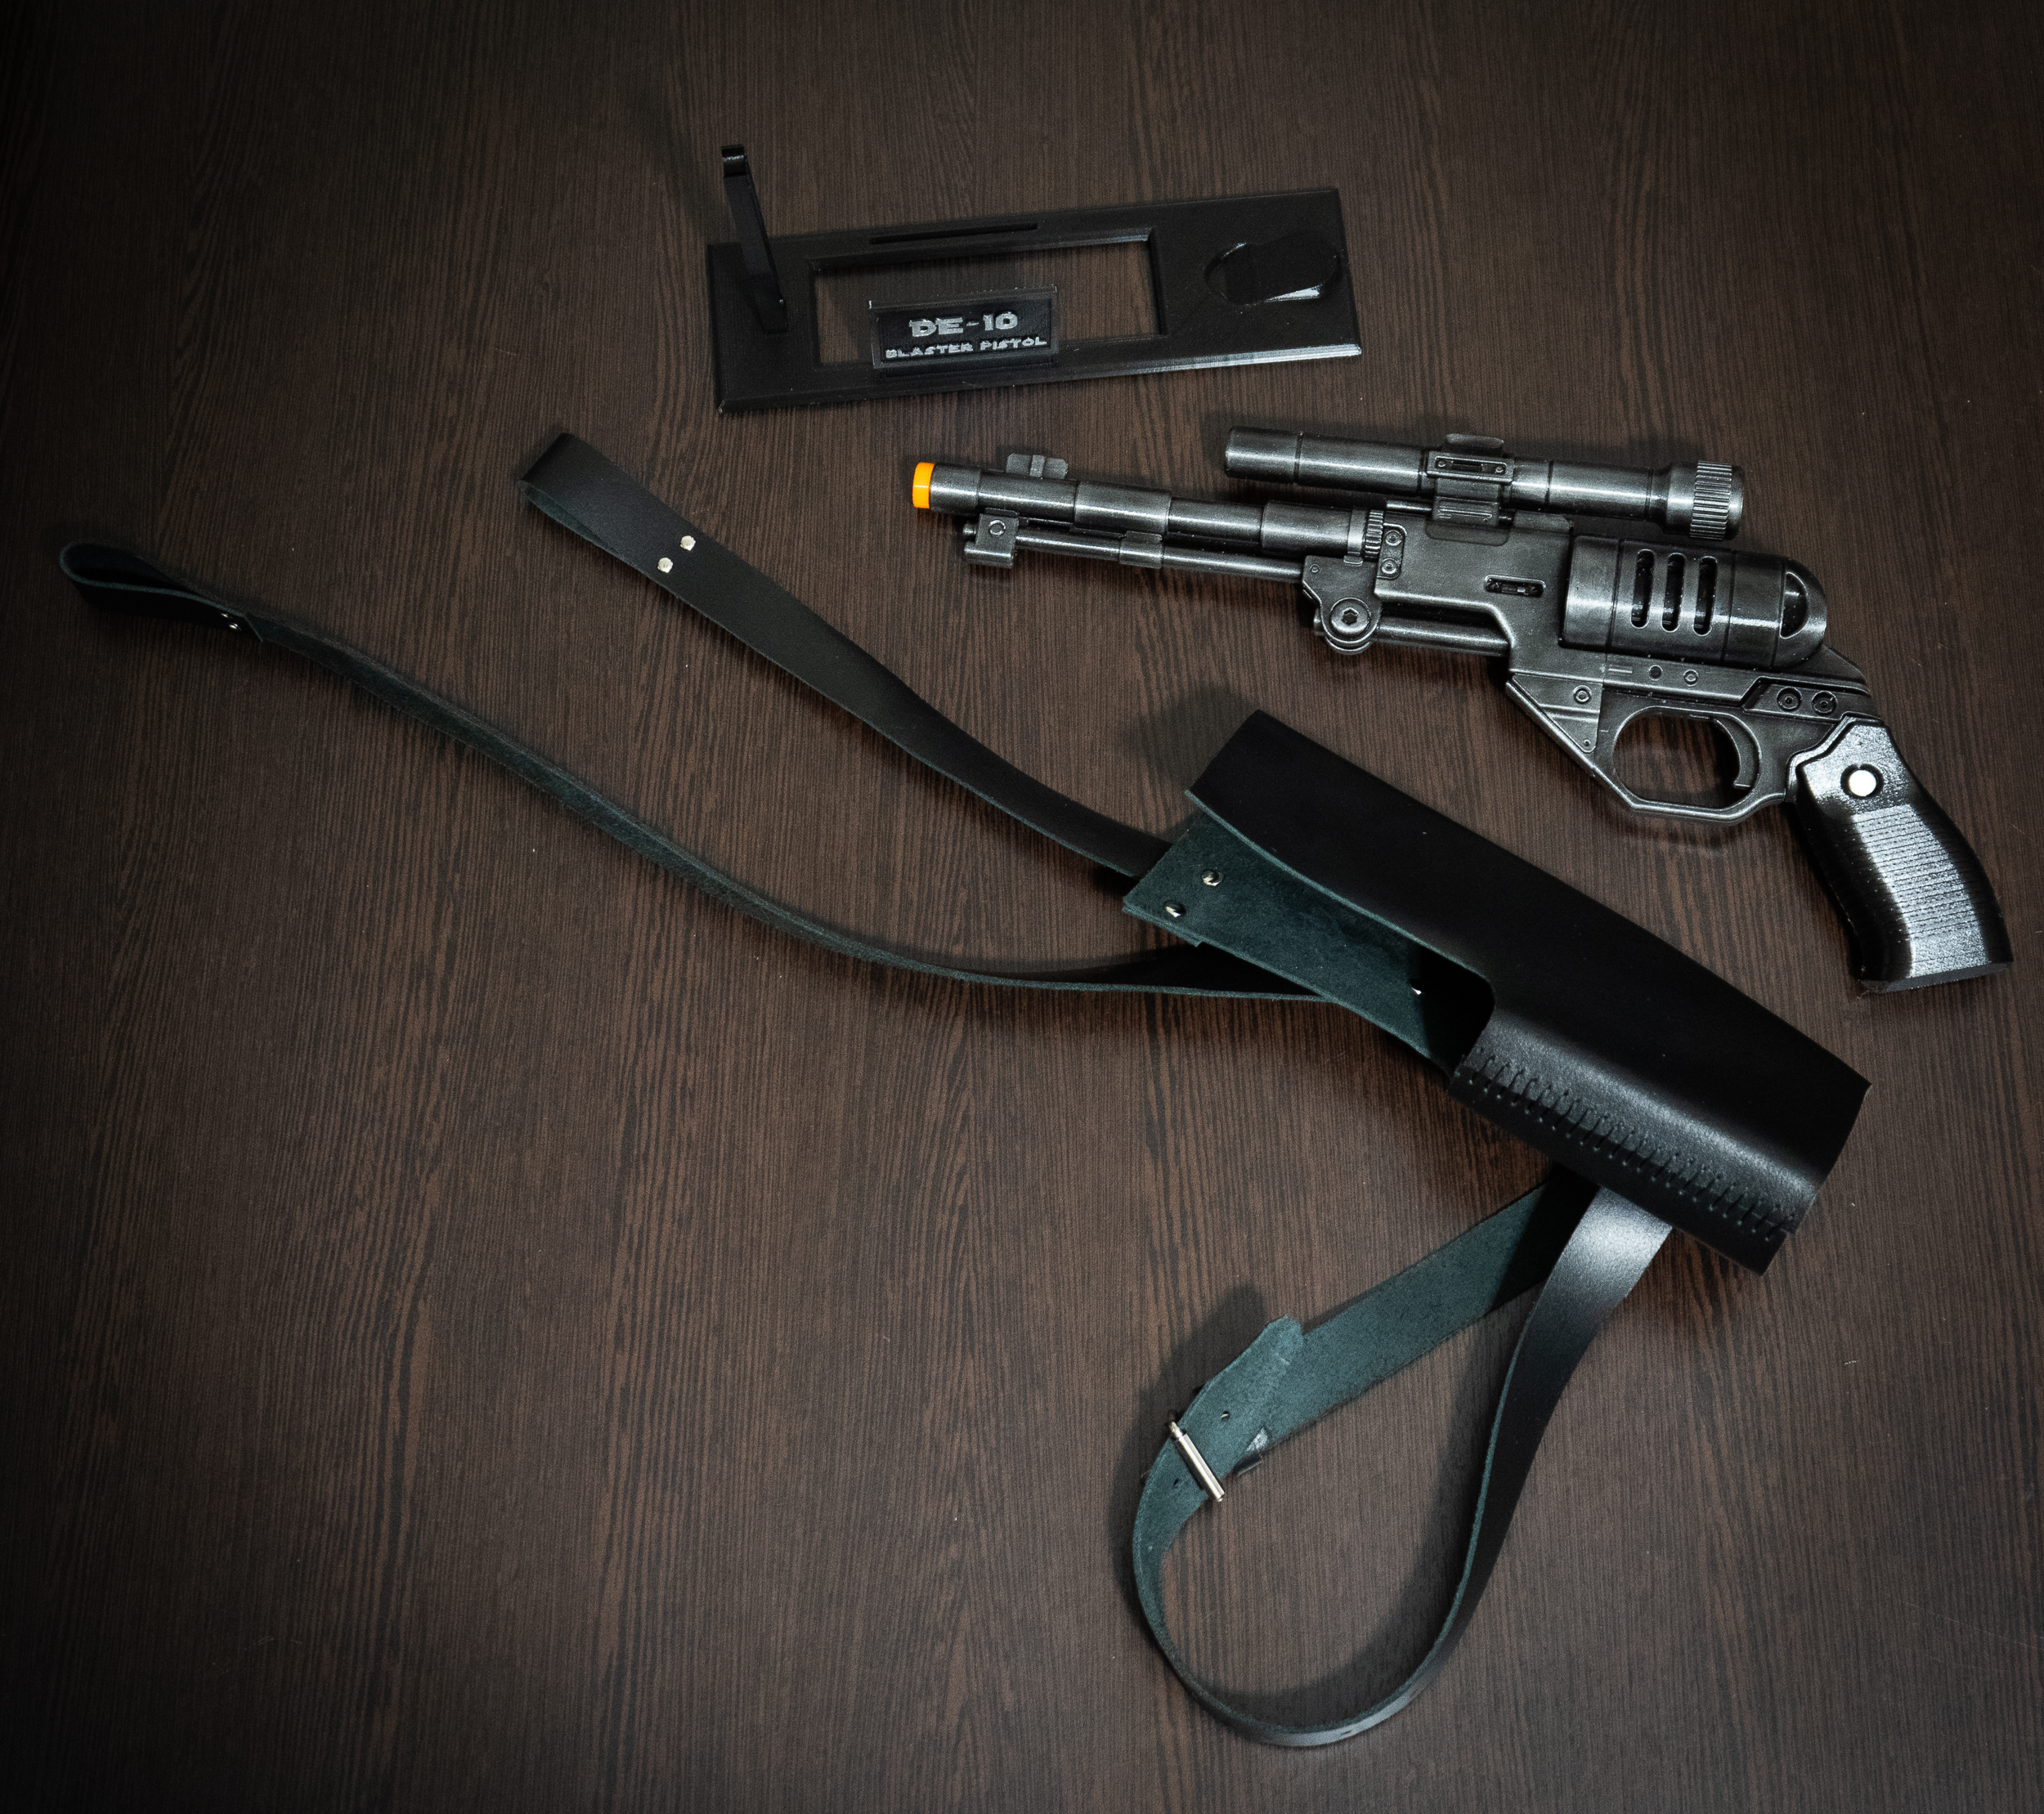 DE-10 blaster pistol